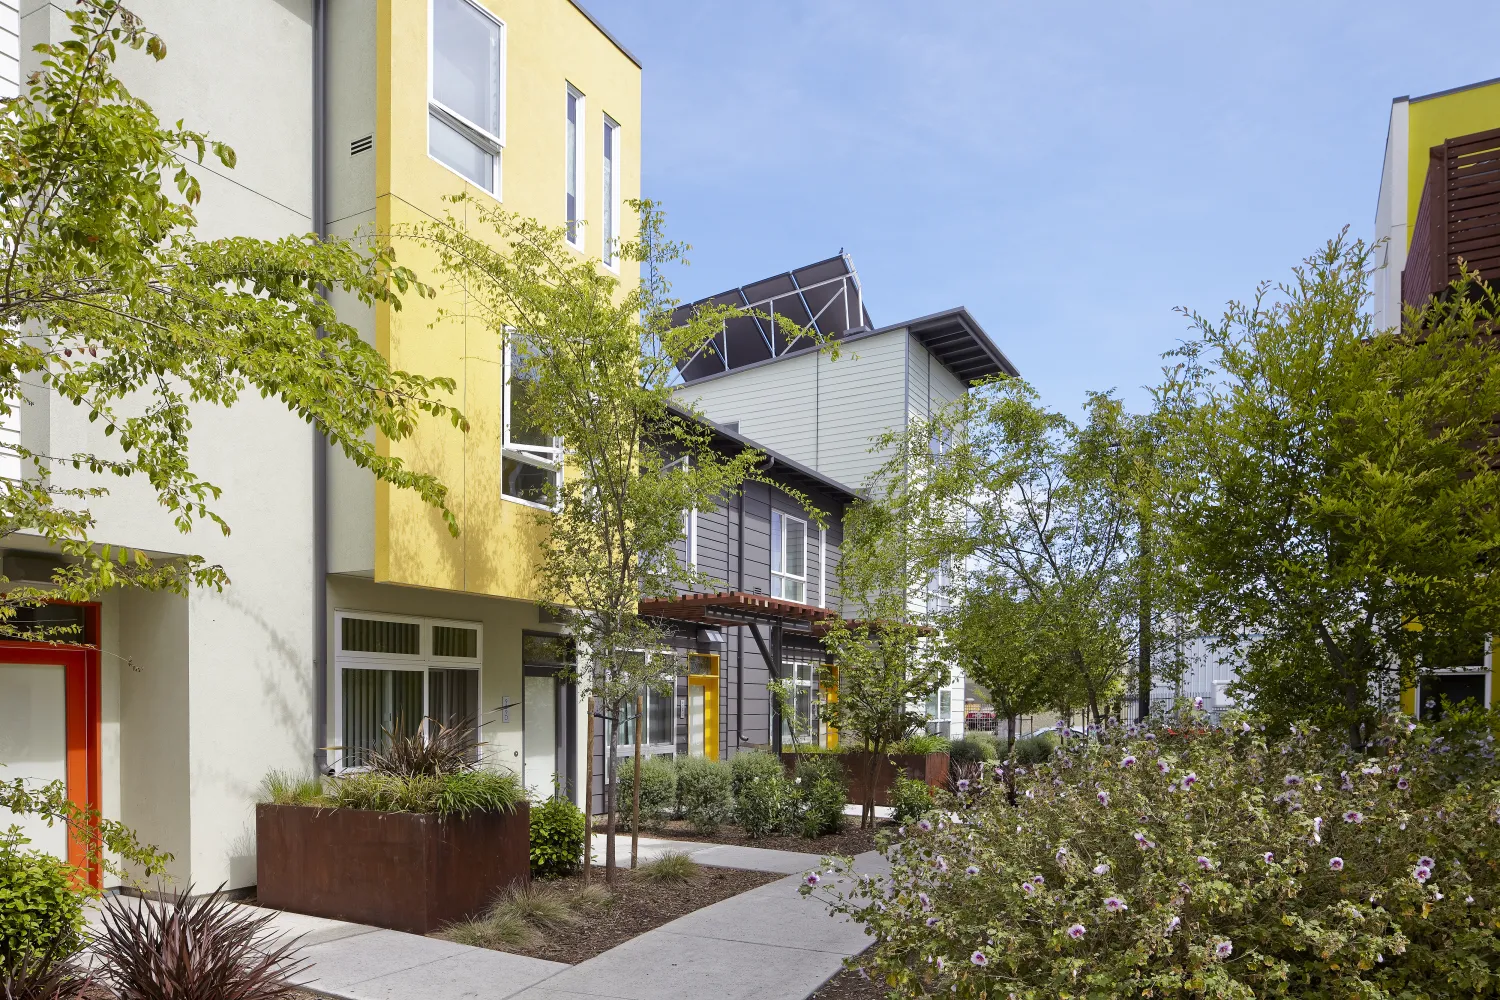 Ground level residences at Tassafaronga Village in East Oakland, CA. 